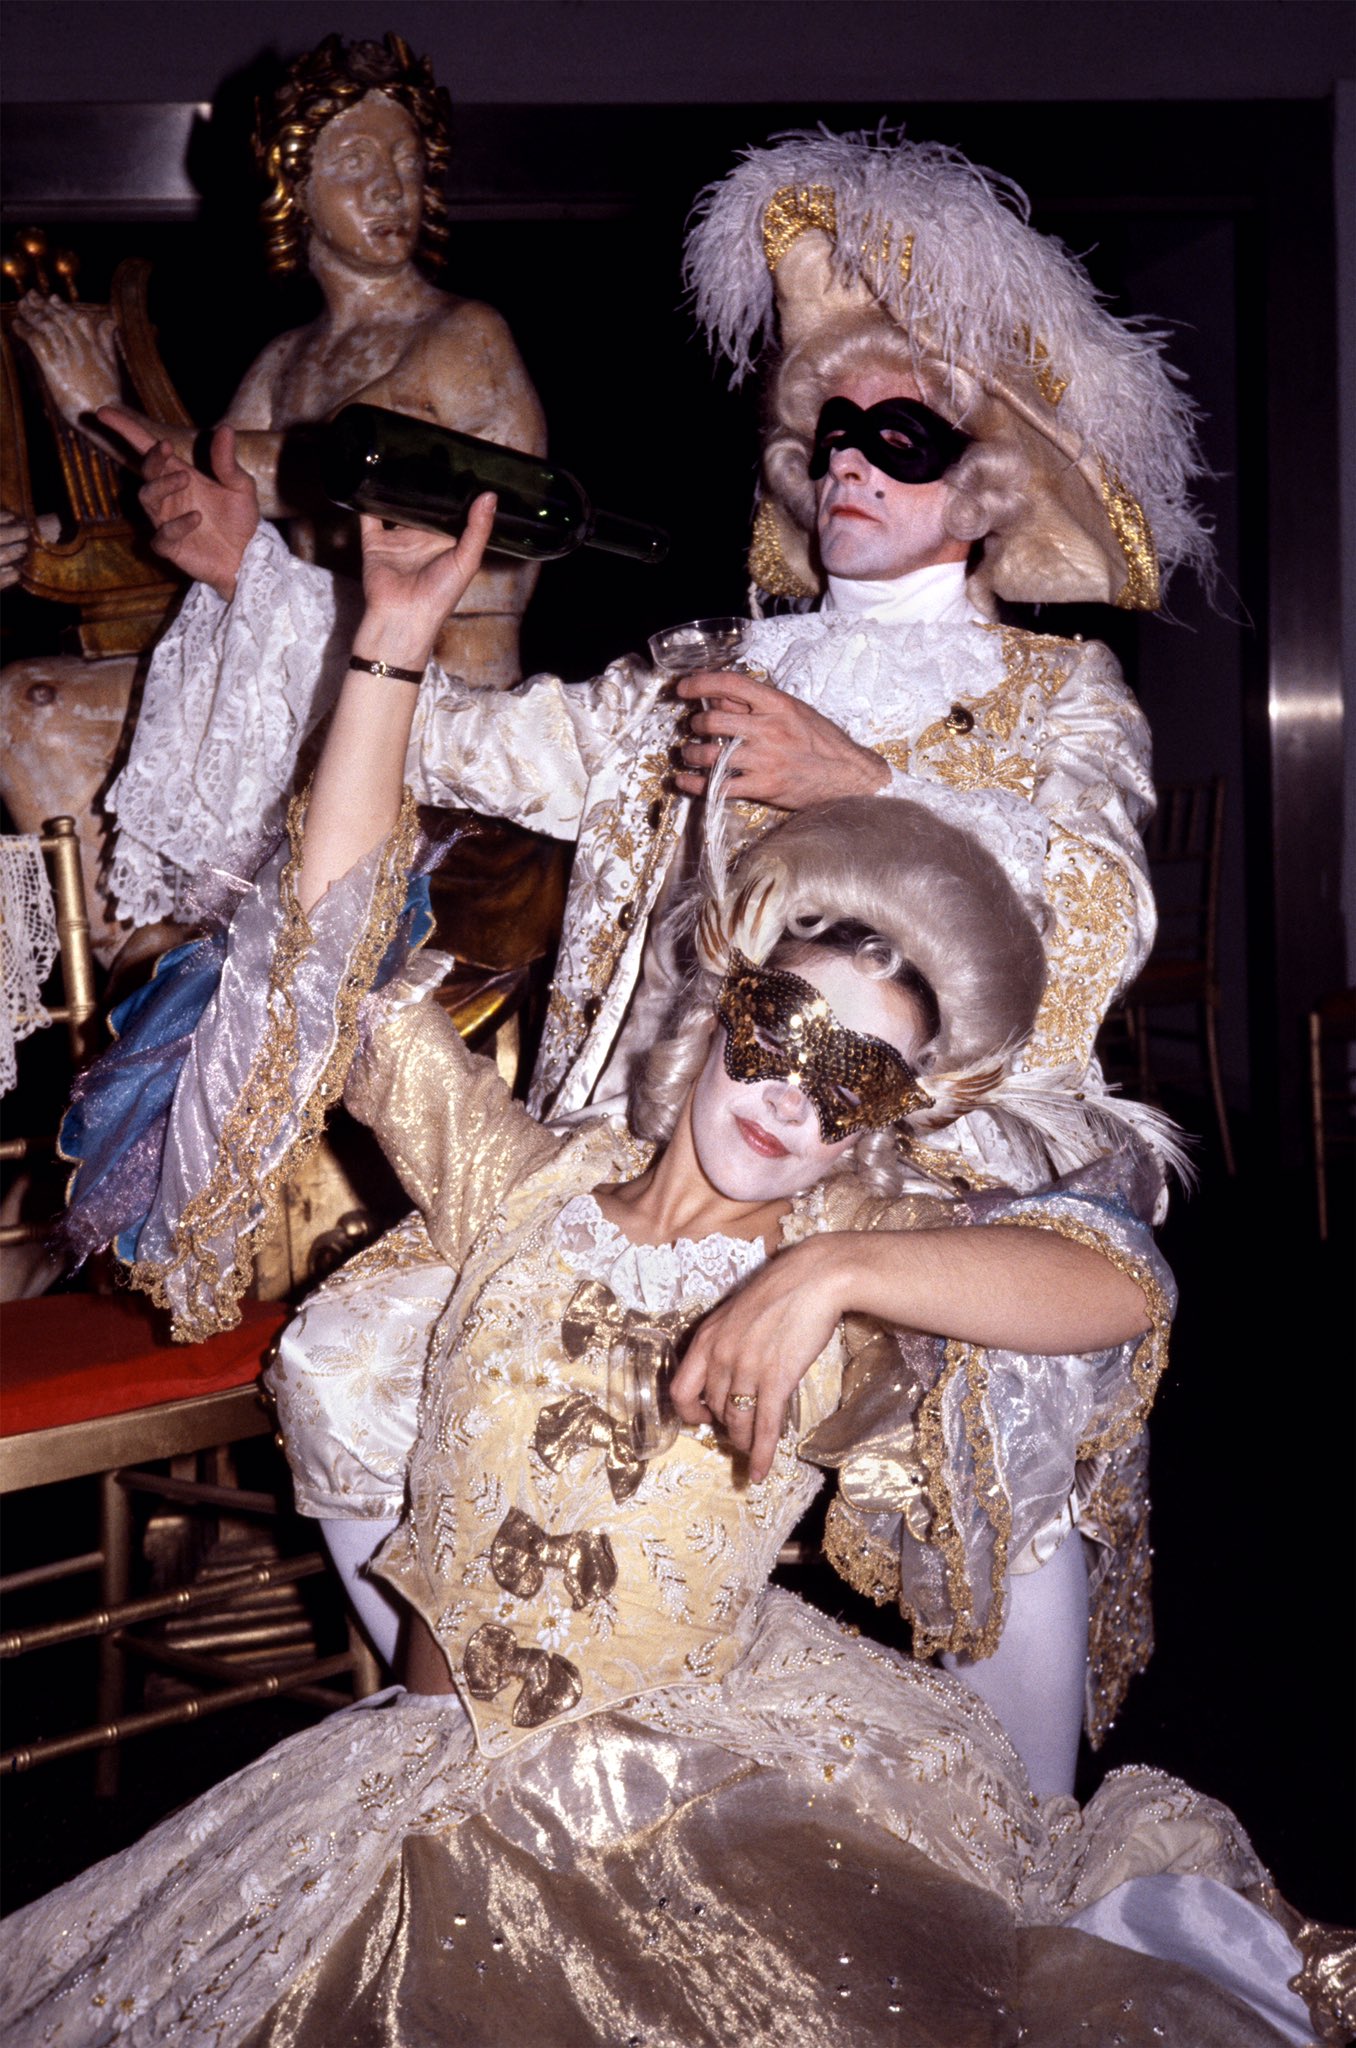 𝒦 on Twitter: "Karl Lagerfeld's Versailles party at Studio 54, 1979  https://t.co/IB380QzpDJ" / Twitter